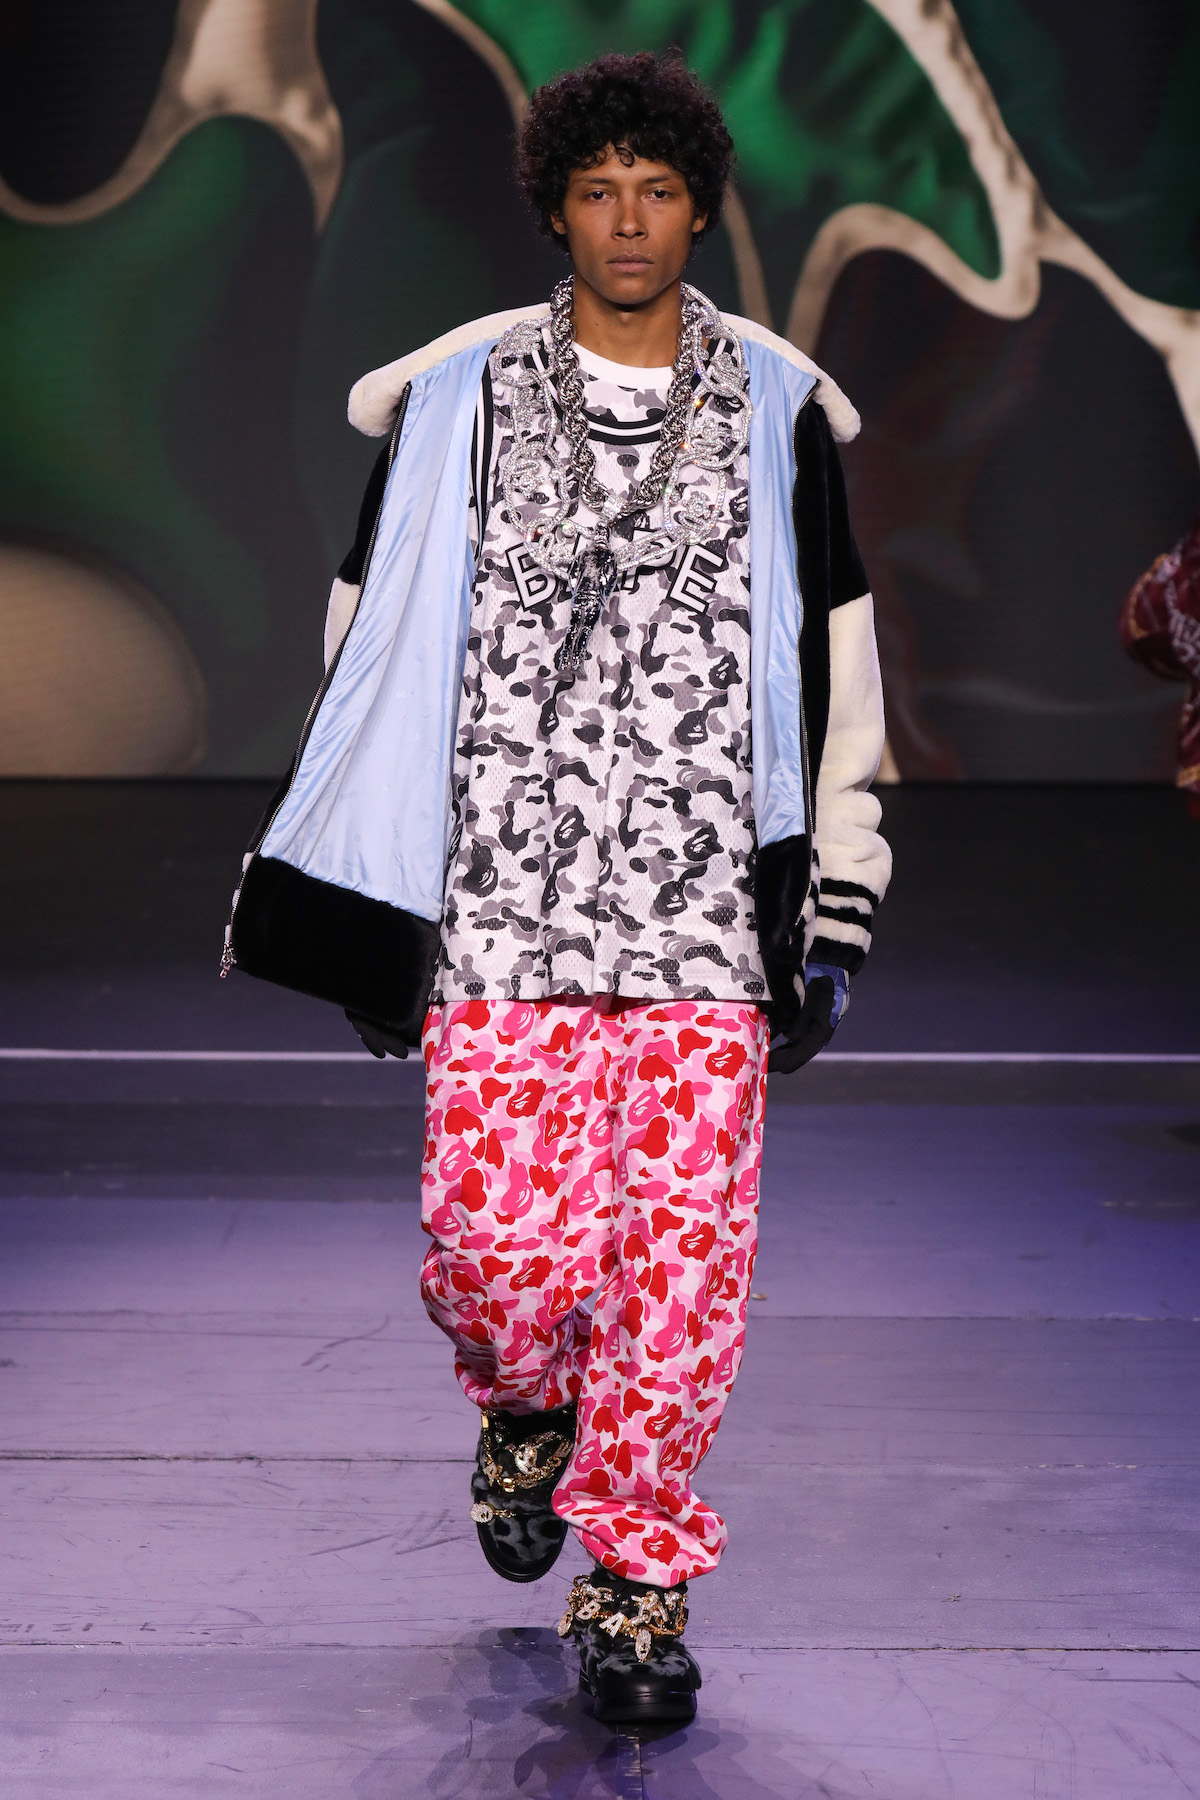 Coi Leray Brings '90s-inspired Streetwear to Louis Vuitton Men's